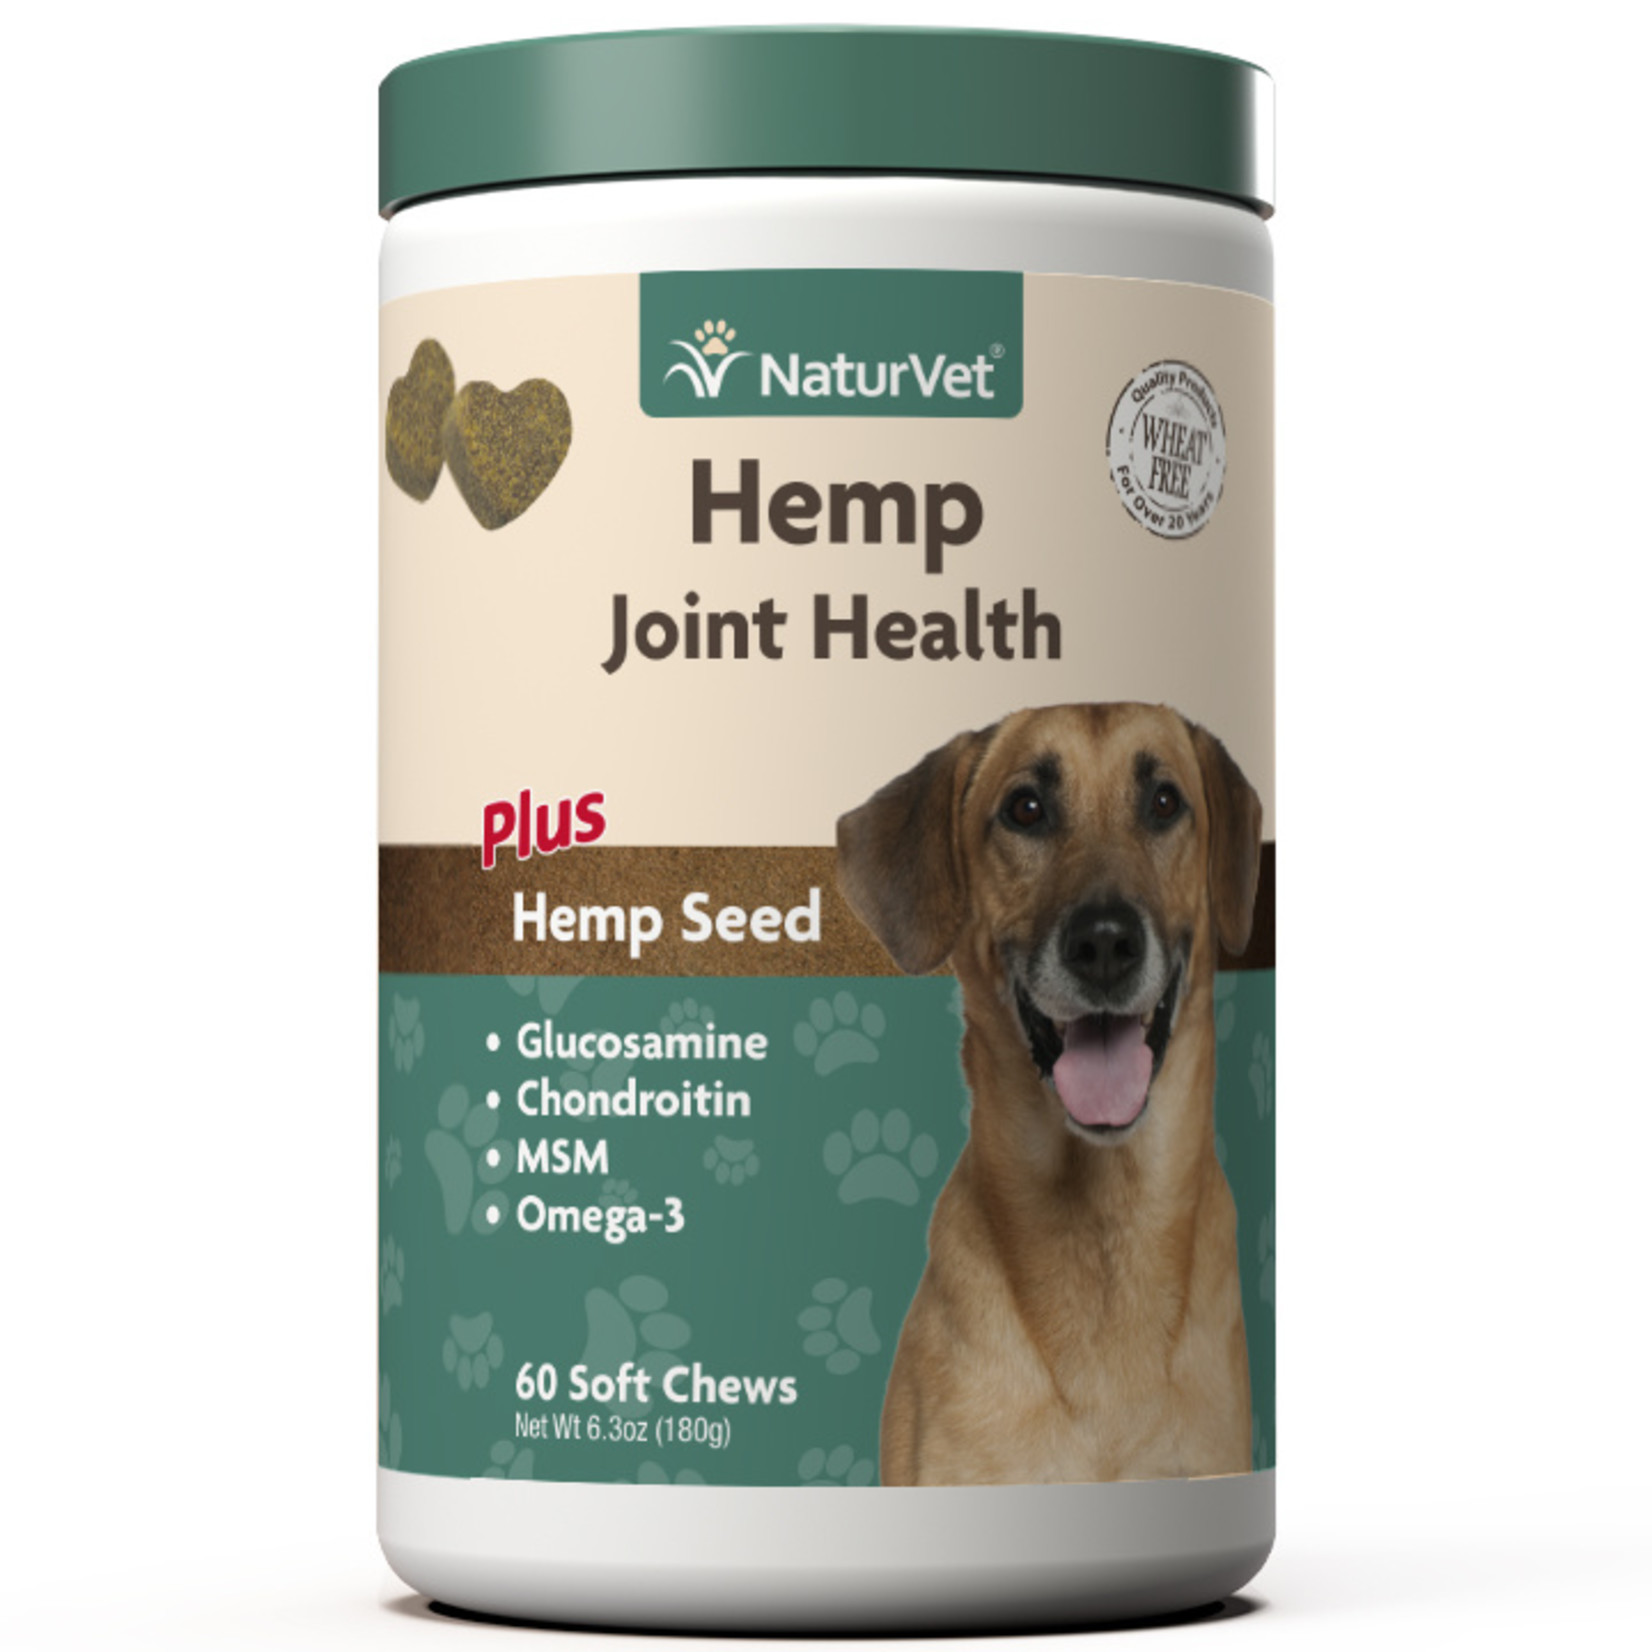 NaturVet NaturVet Hemp Joint Health + Hemp Seed Soft Chews 60ct